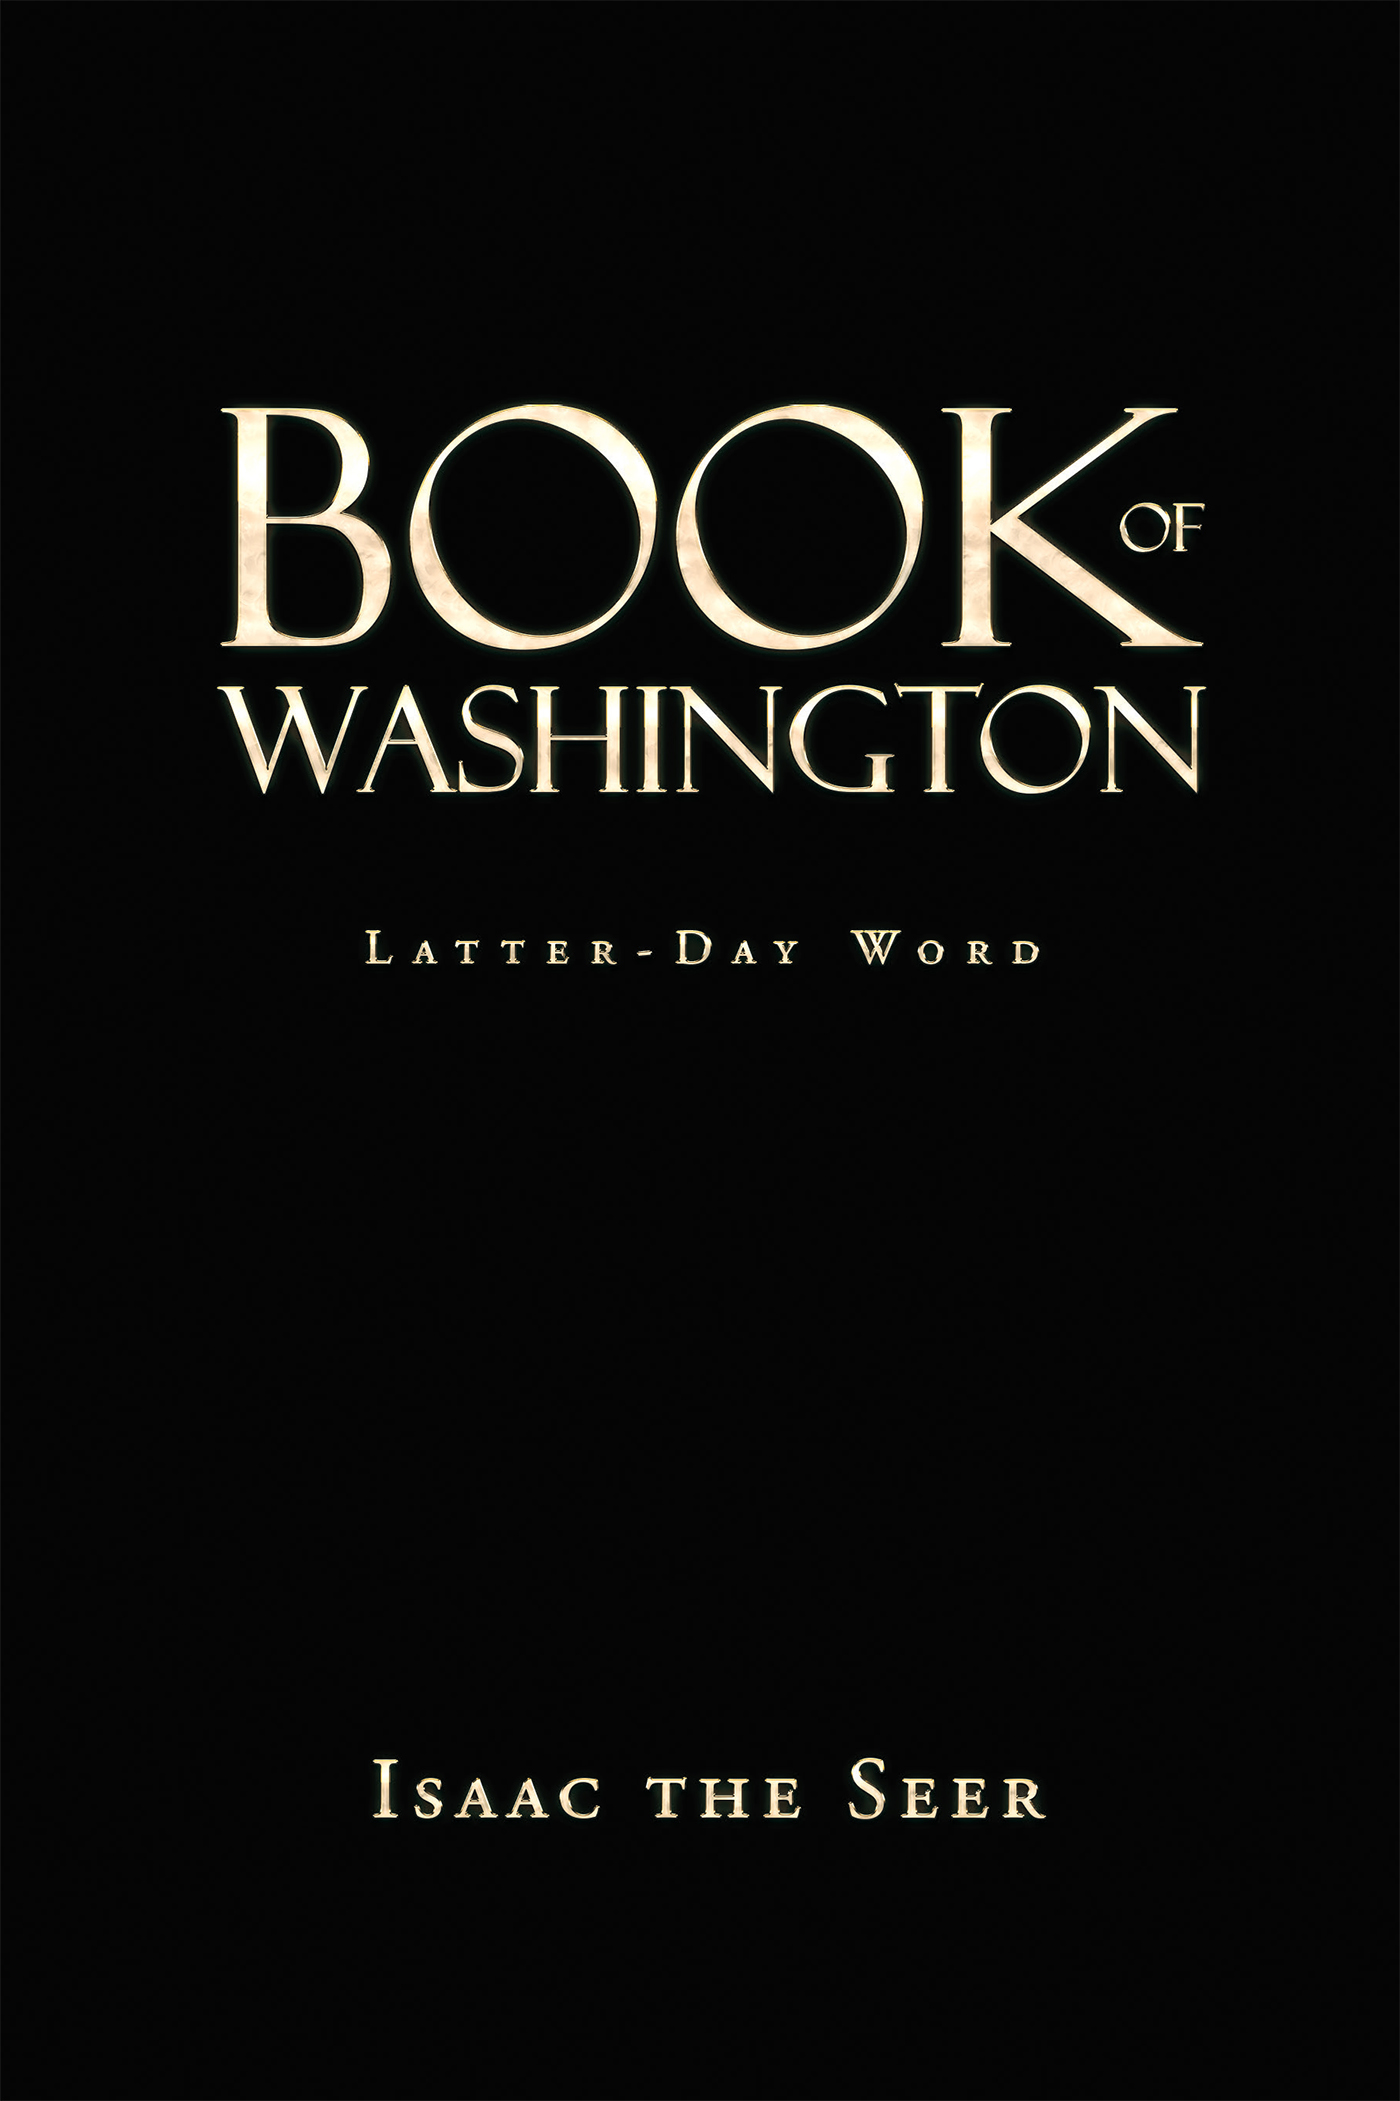 Book of Washington Cover Image